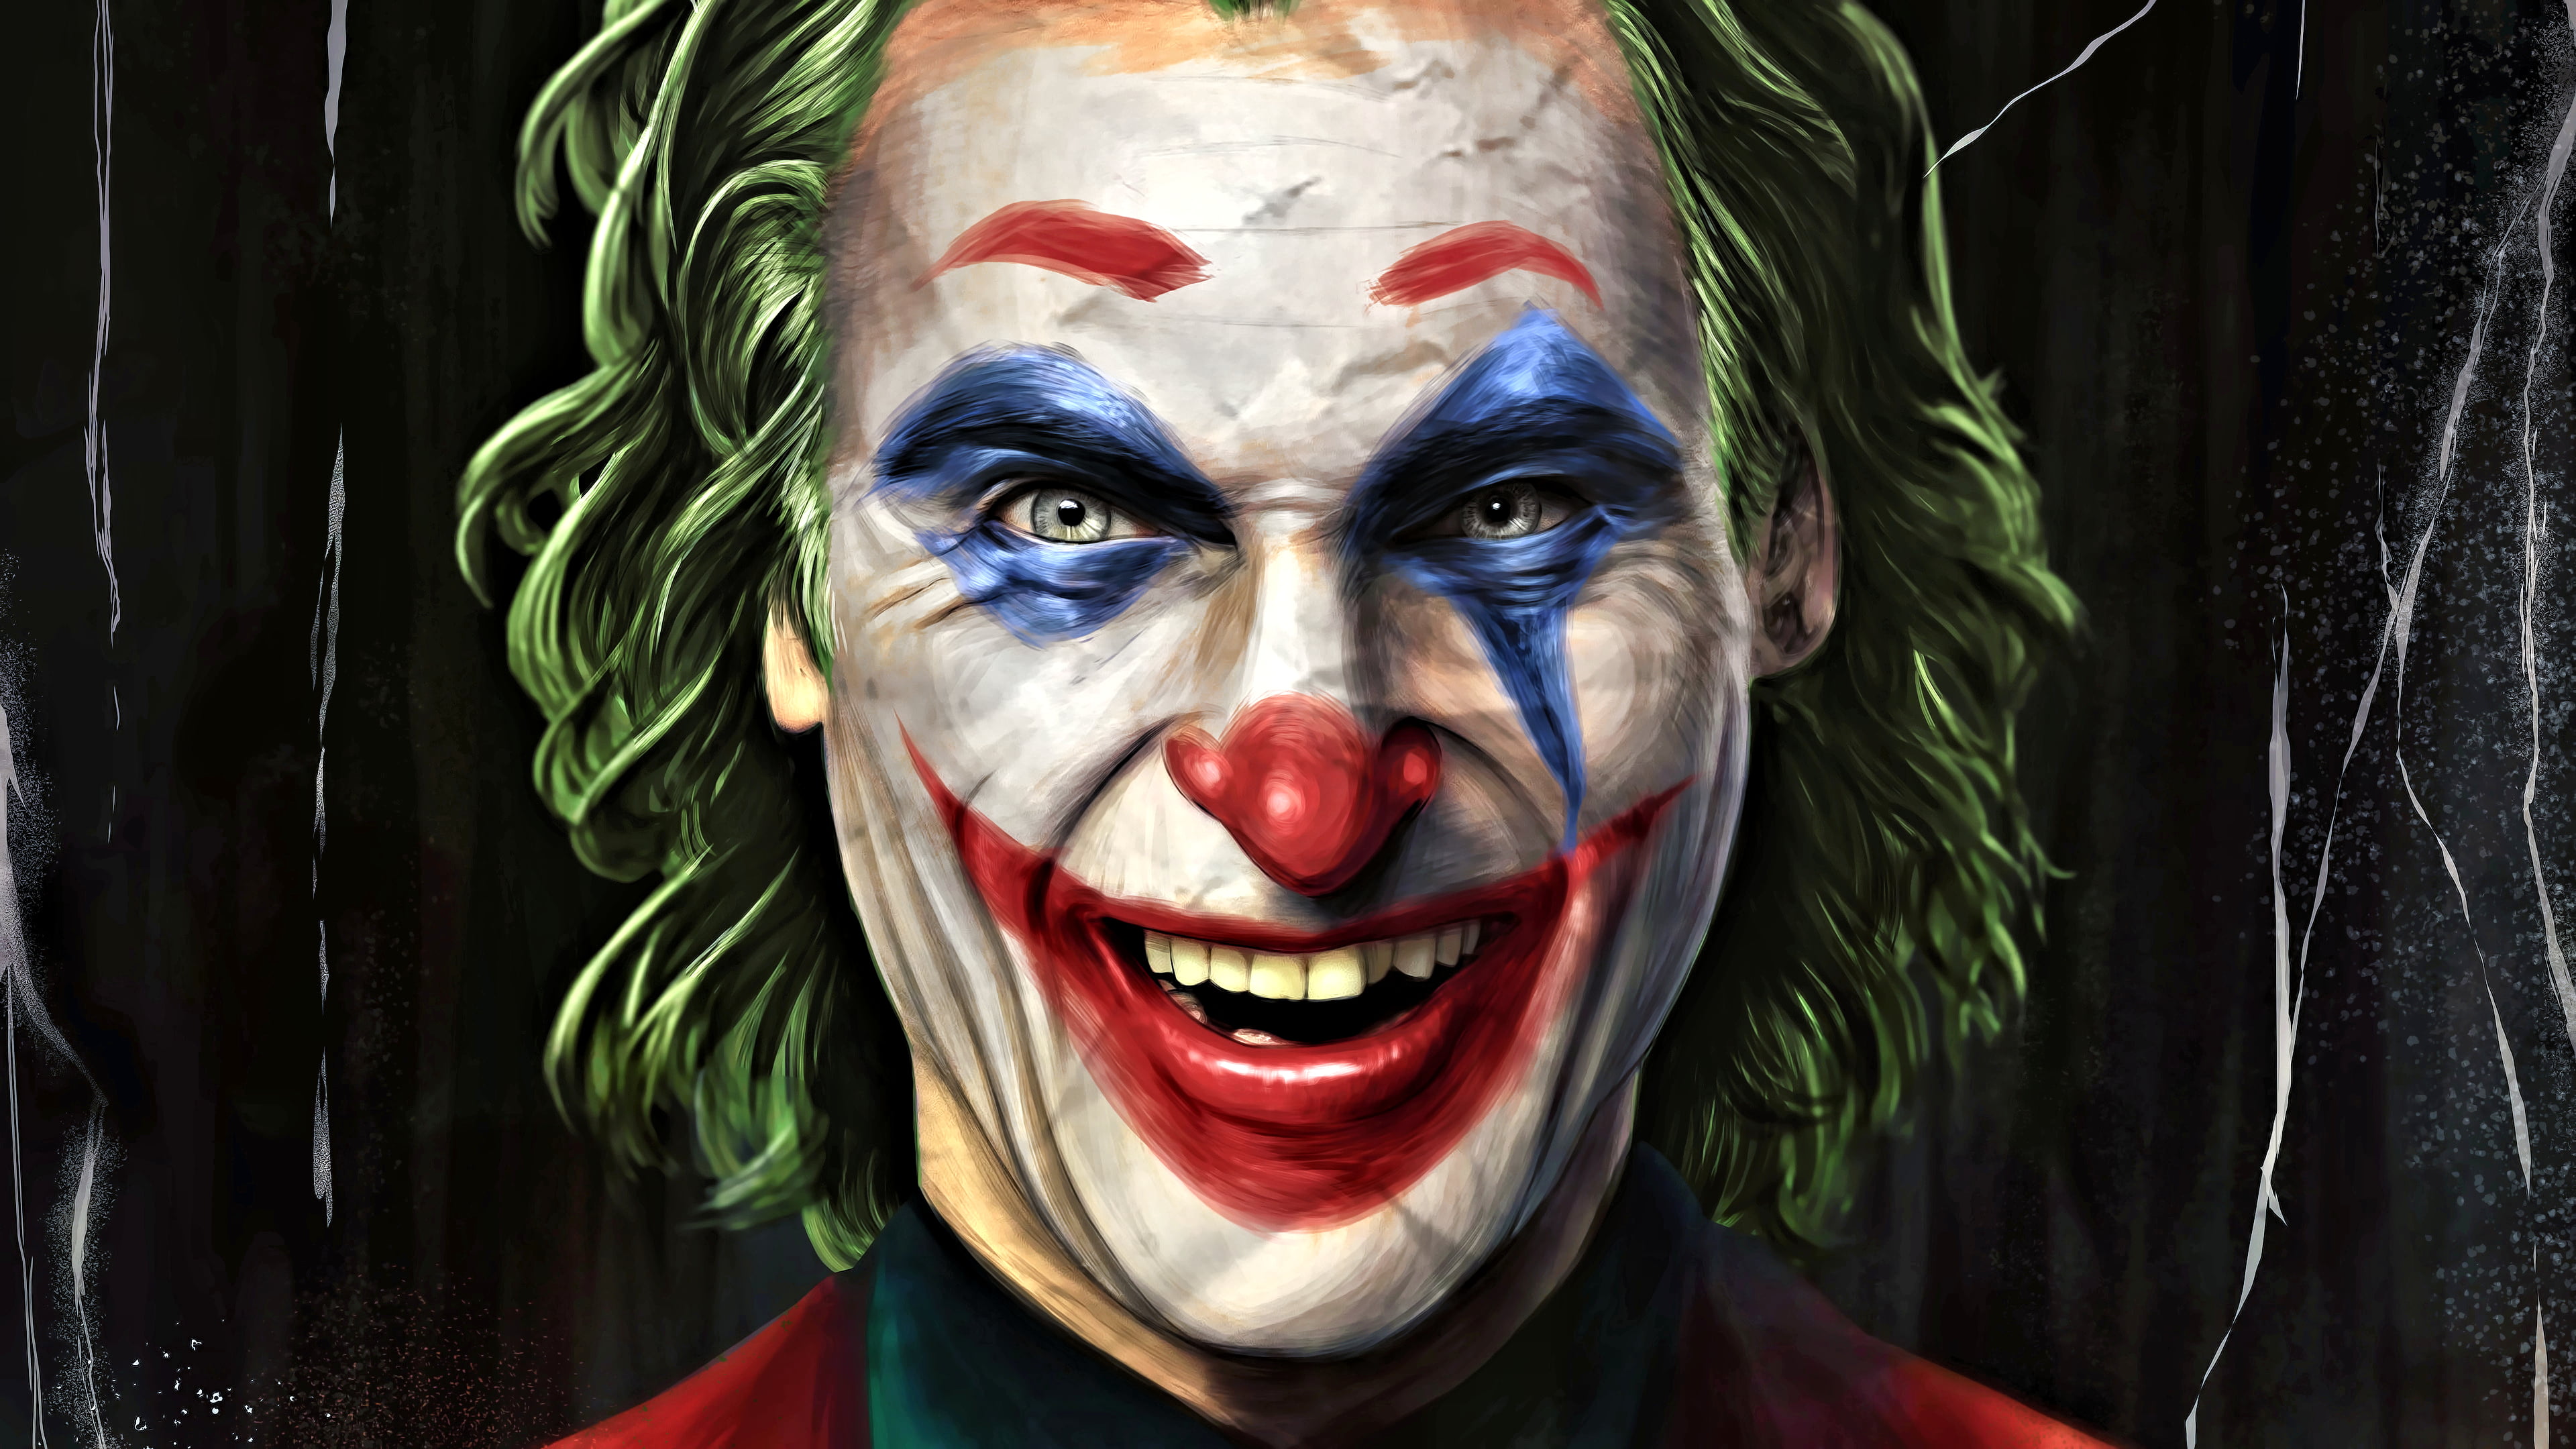 Joker Hd Wallpaper Joker 19 Movie Gotham City Paint Brushes Dc Comics Wallpapers13 Com